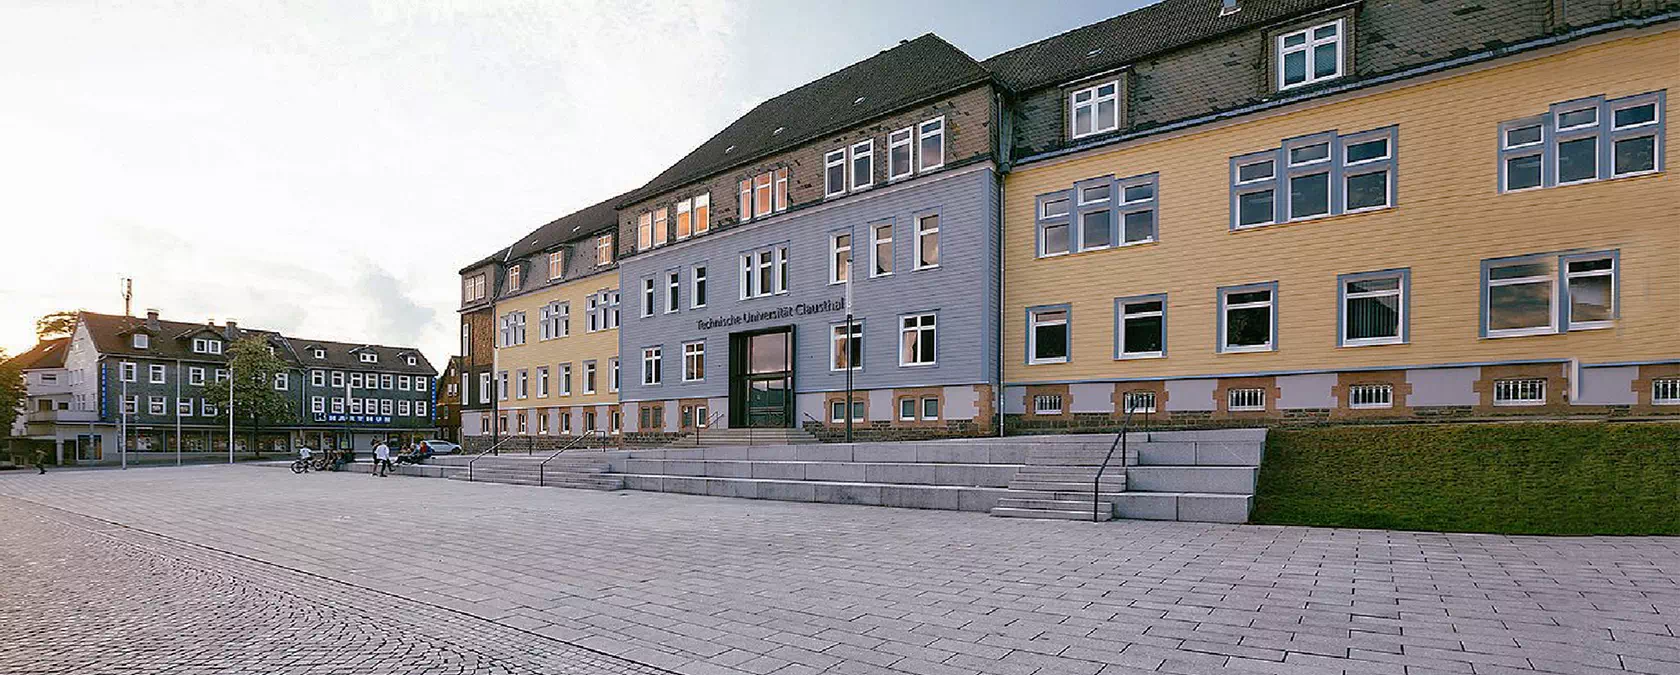 Clausthal Teknik Üniversitesi